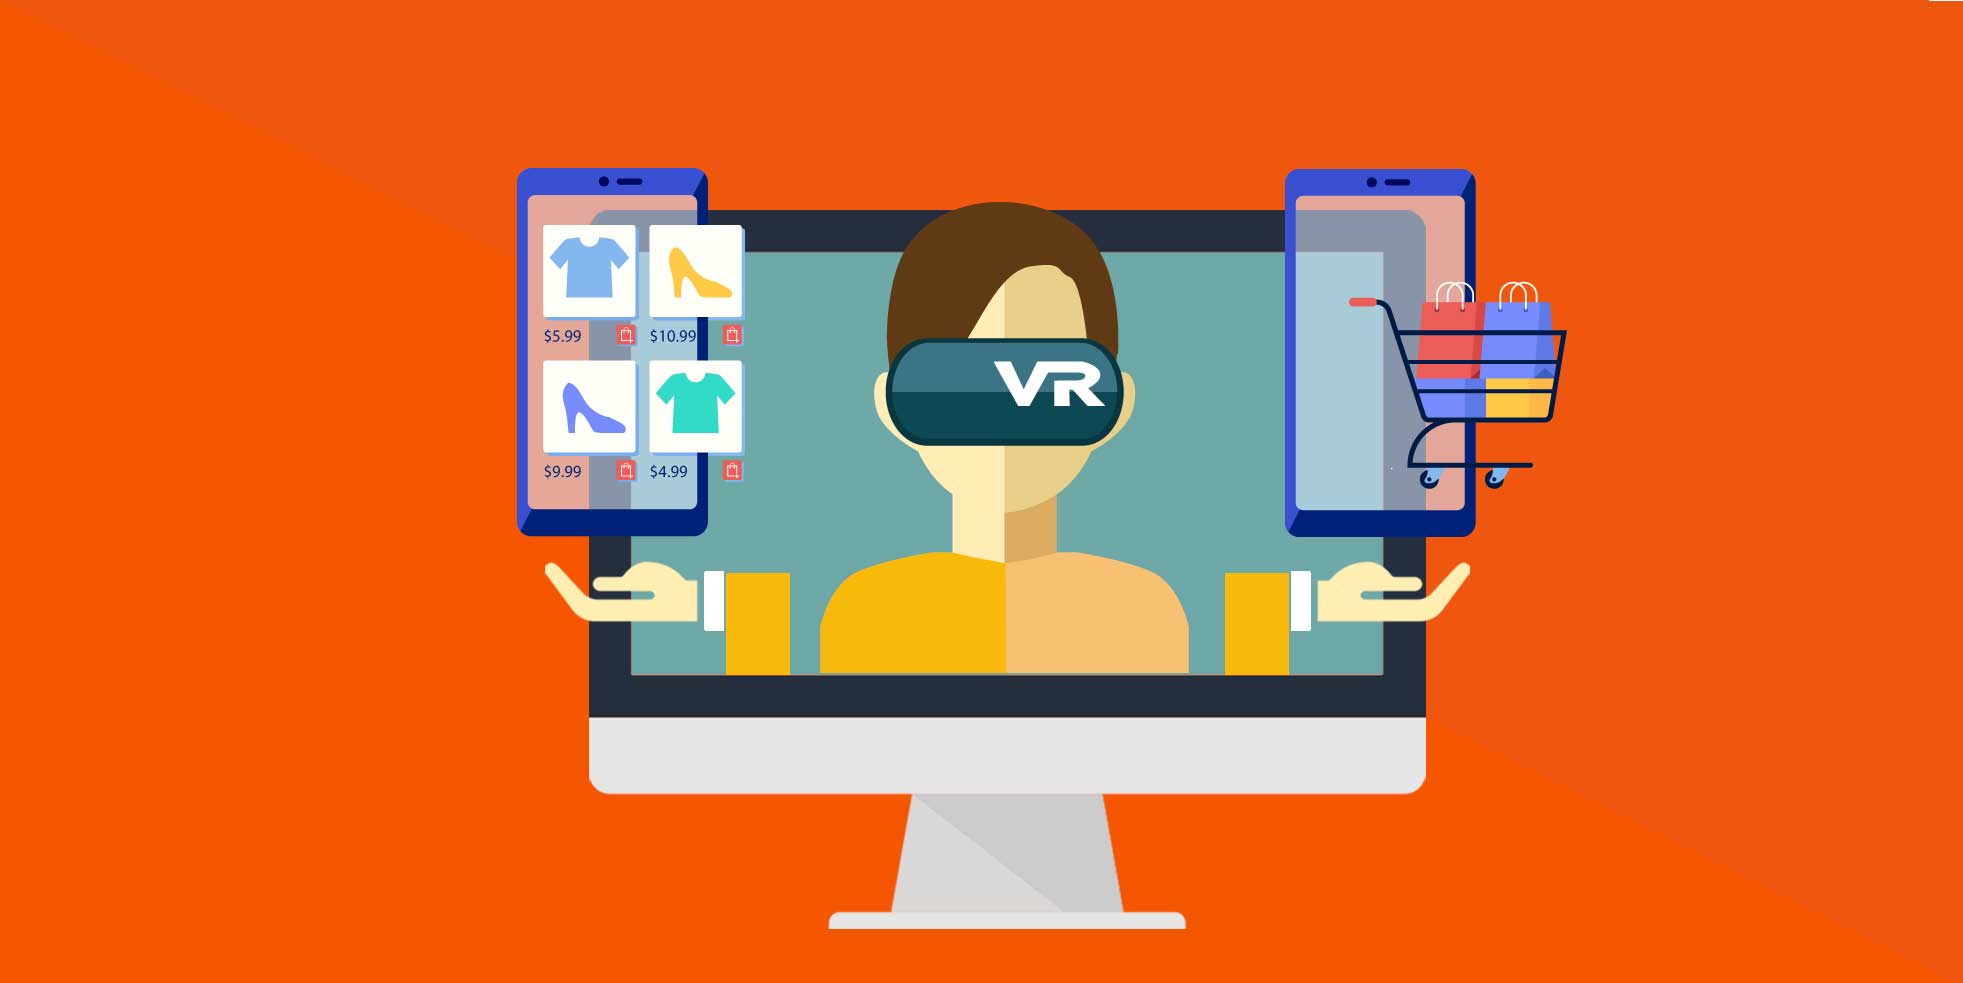 Le tecnologie AR VR e MR